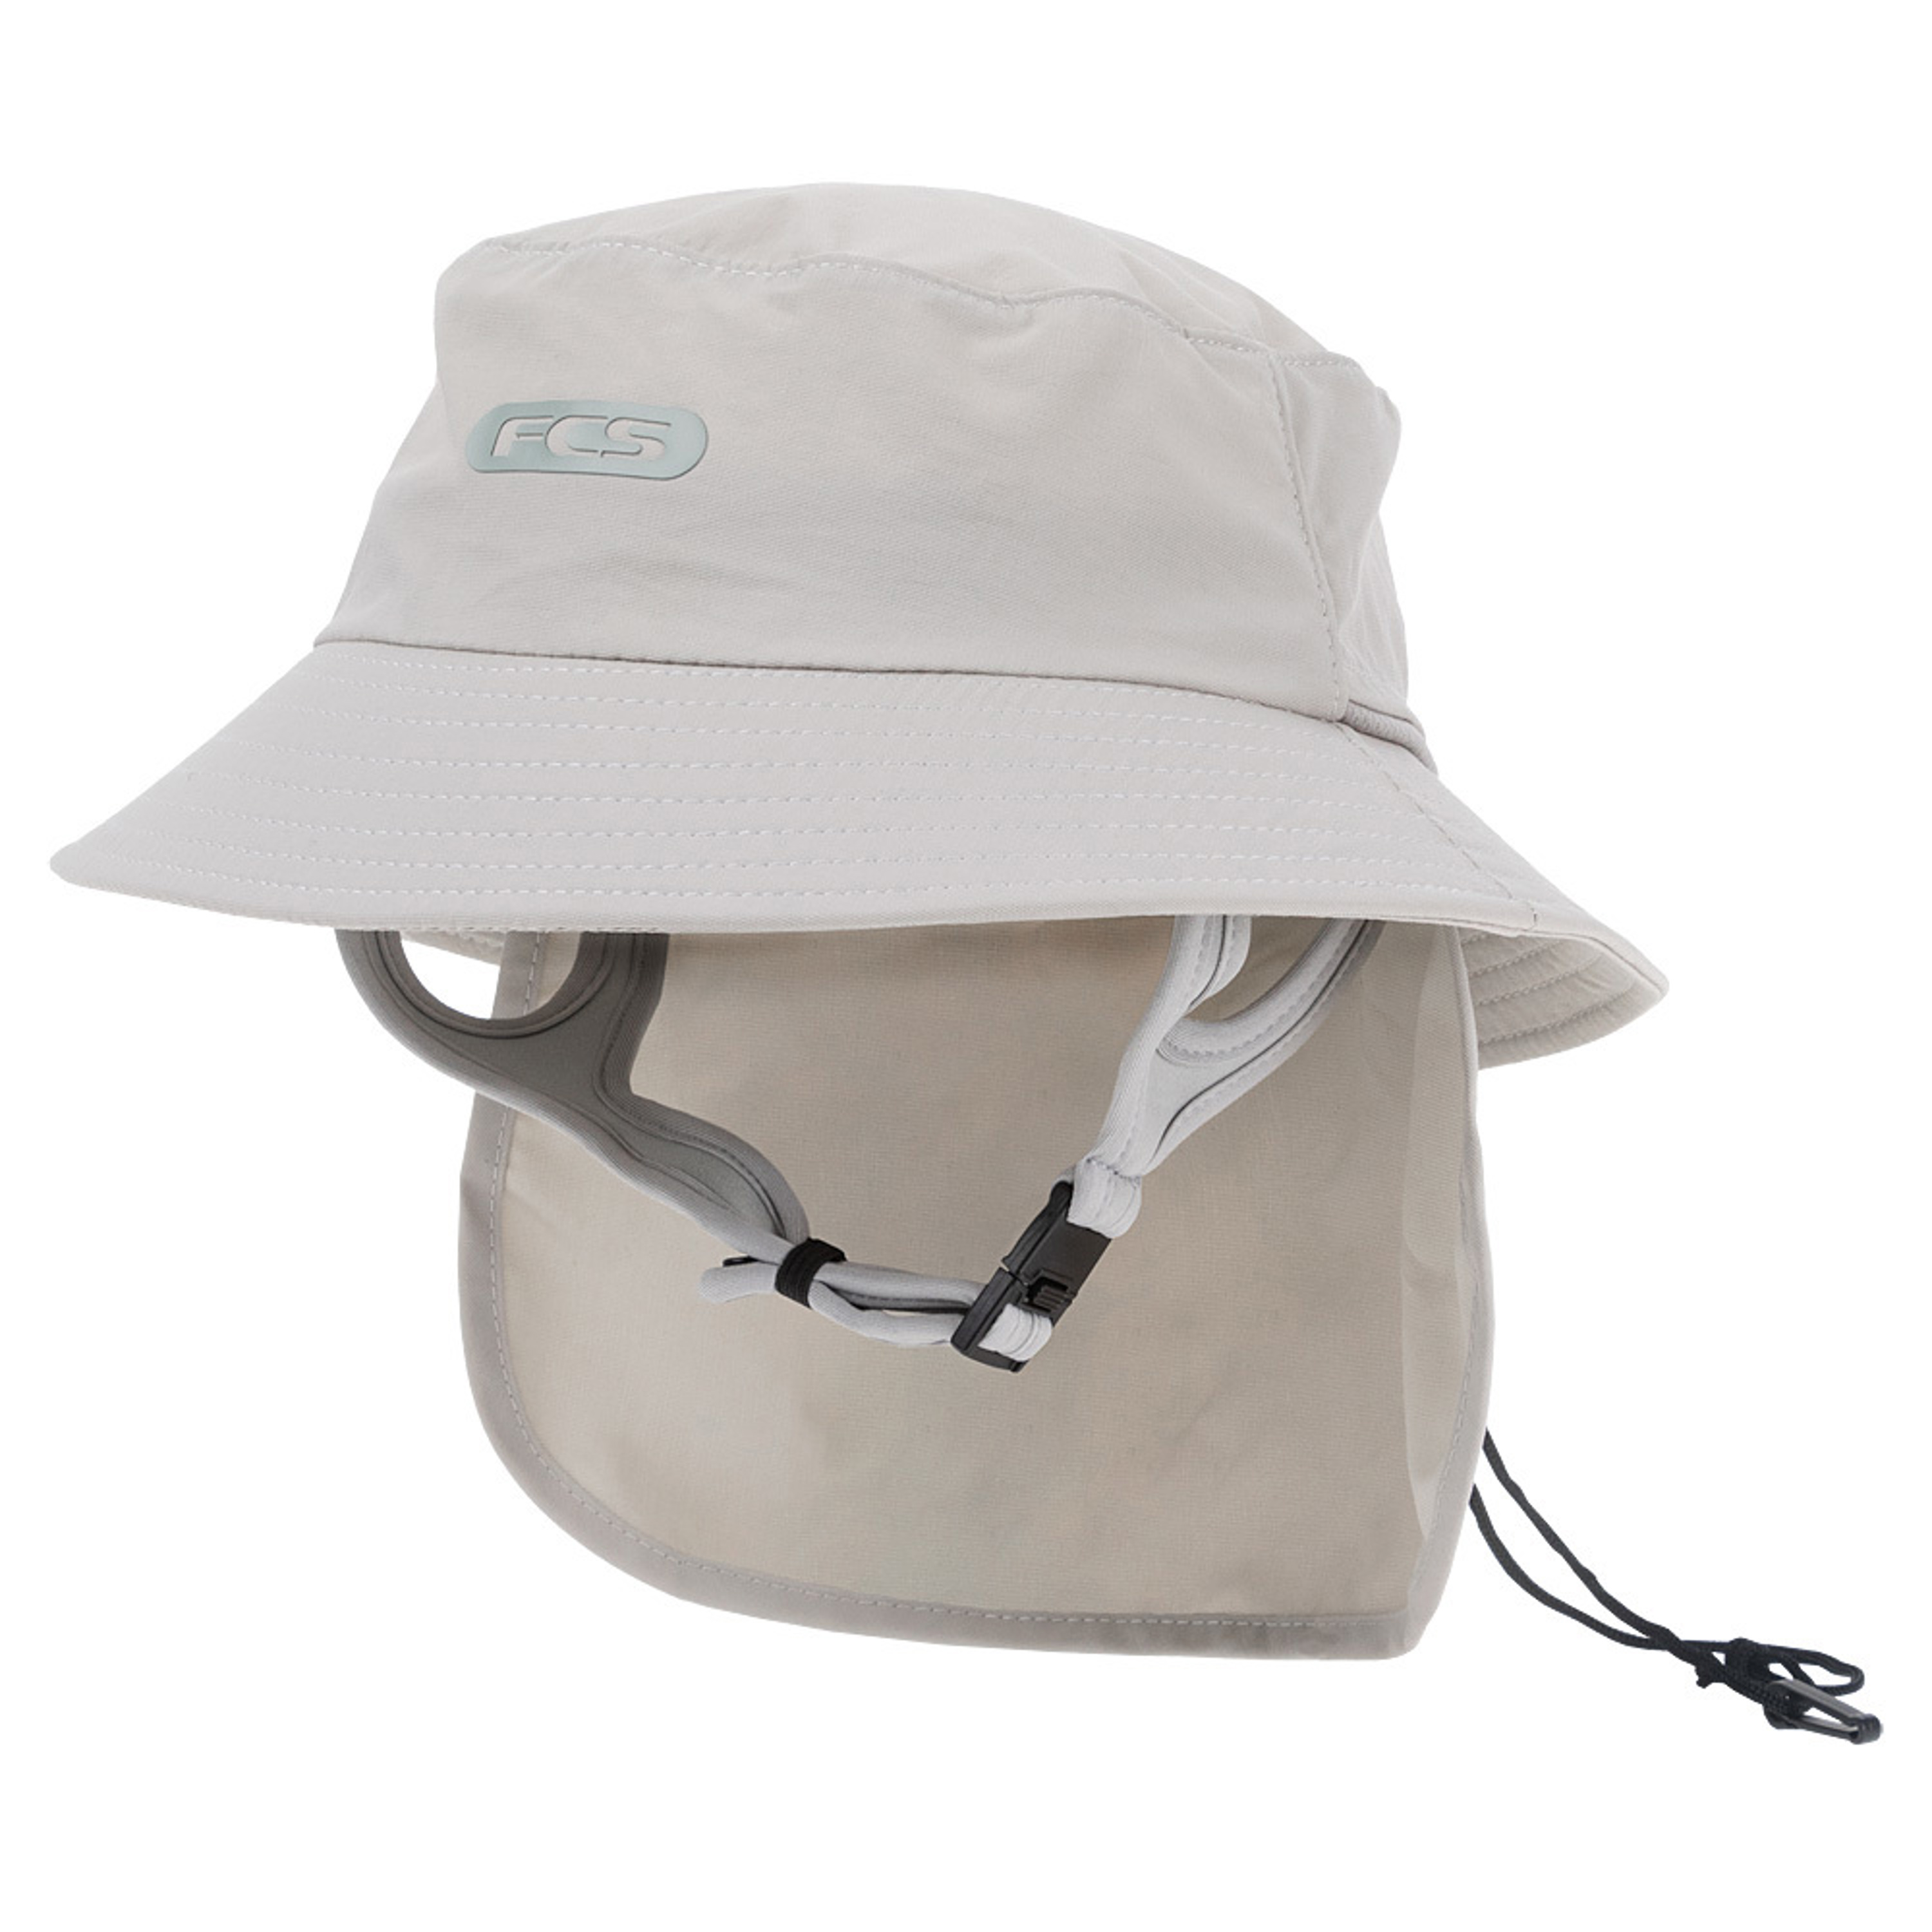 FCS Essential Bucket Surf Hat - Heather Blue - New